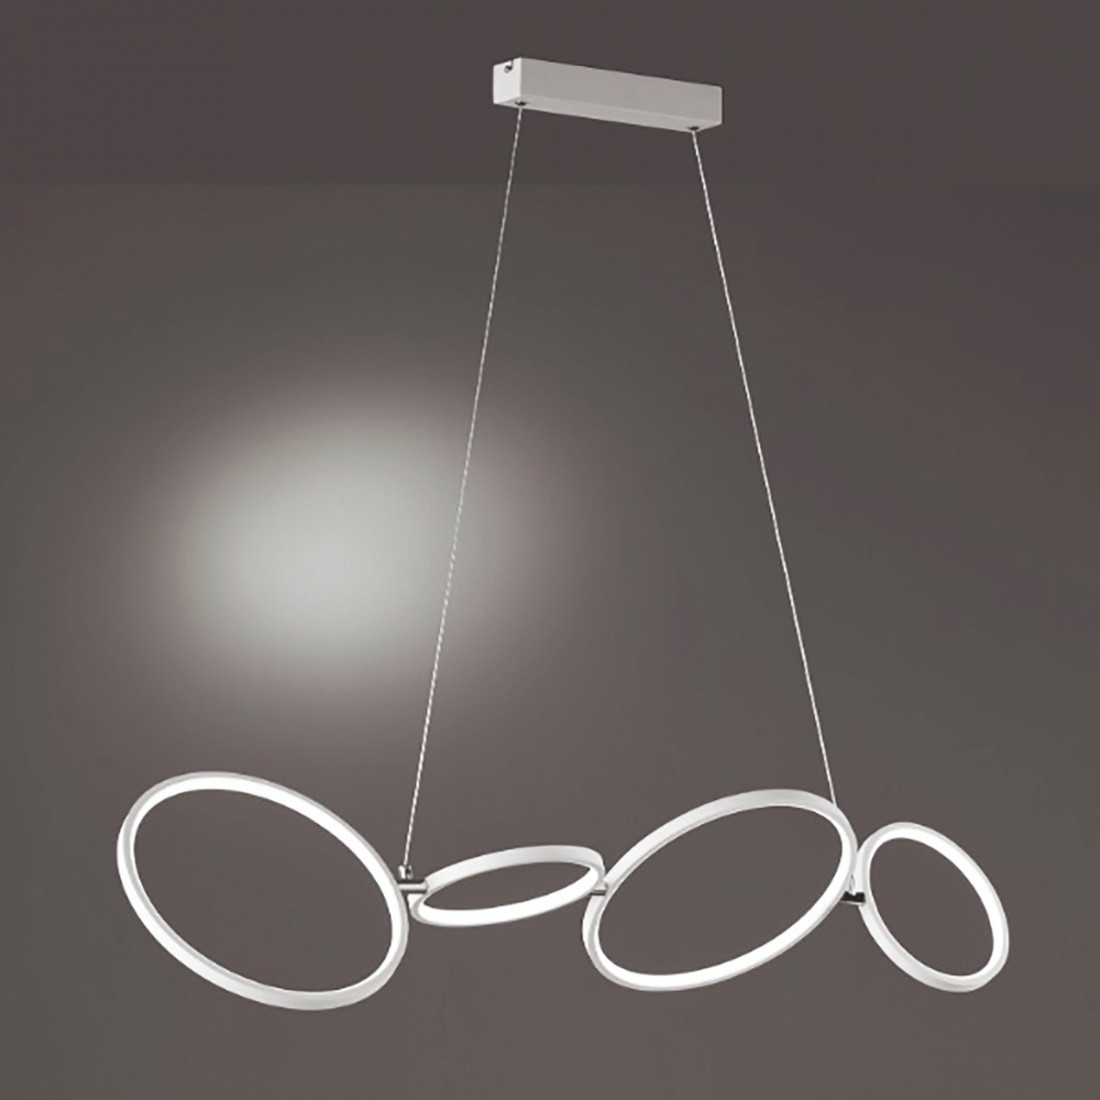 Rondo Trio Lighting 322610431 lustre moderne avec 4 anneaux led dimmables